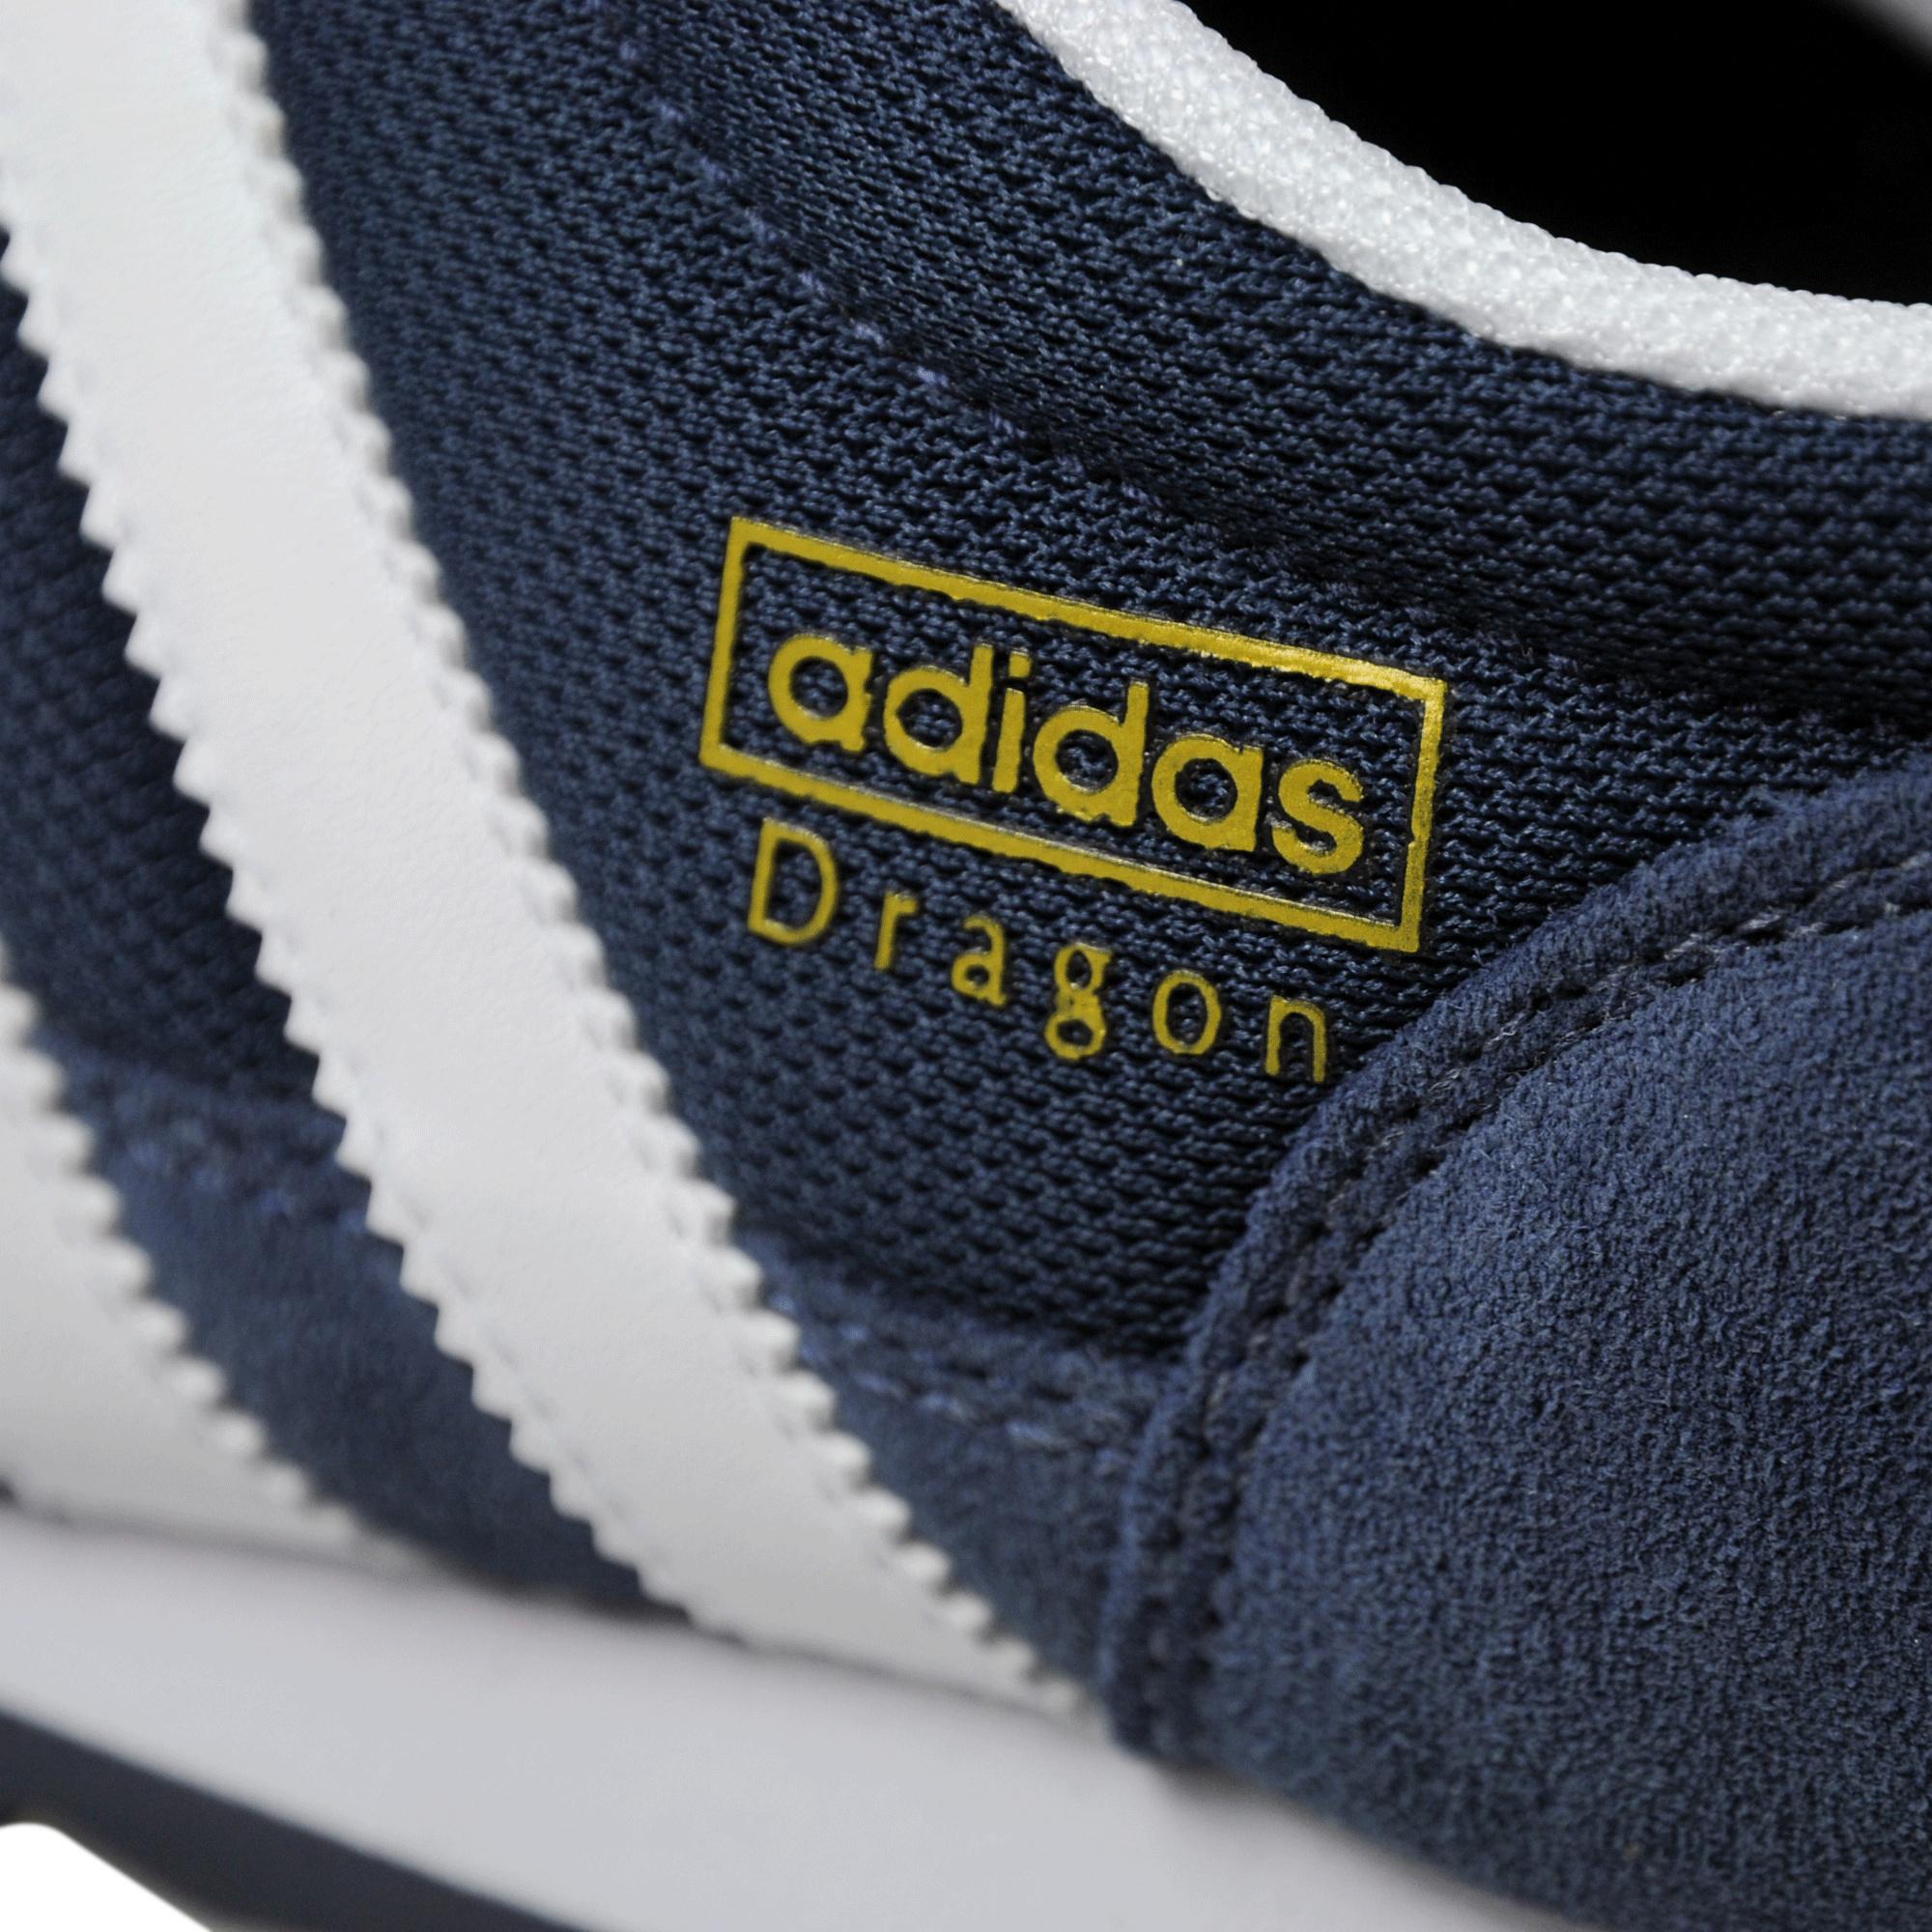 adidas Originals Suede Dragon in Blue for Men - Lyst